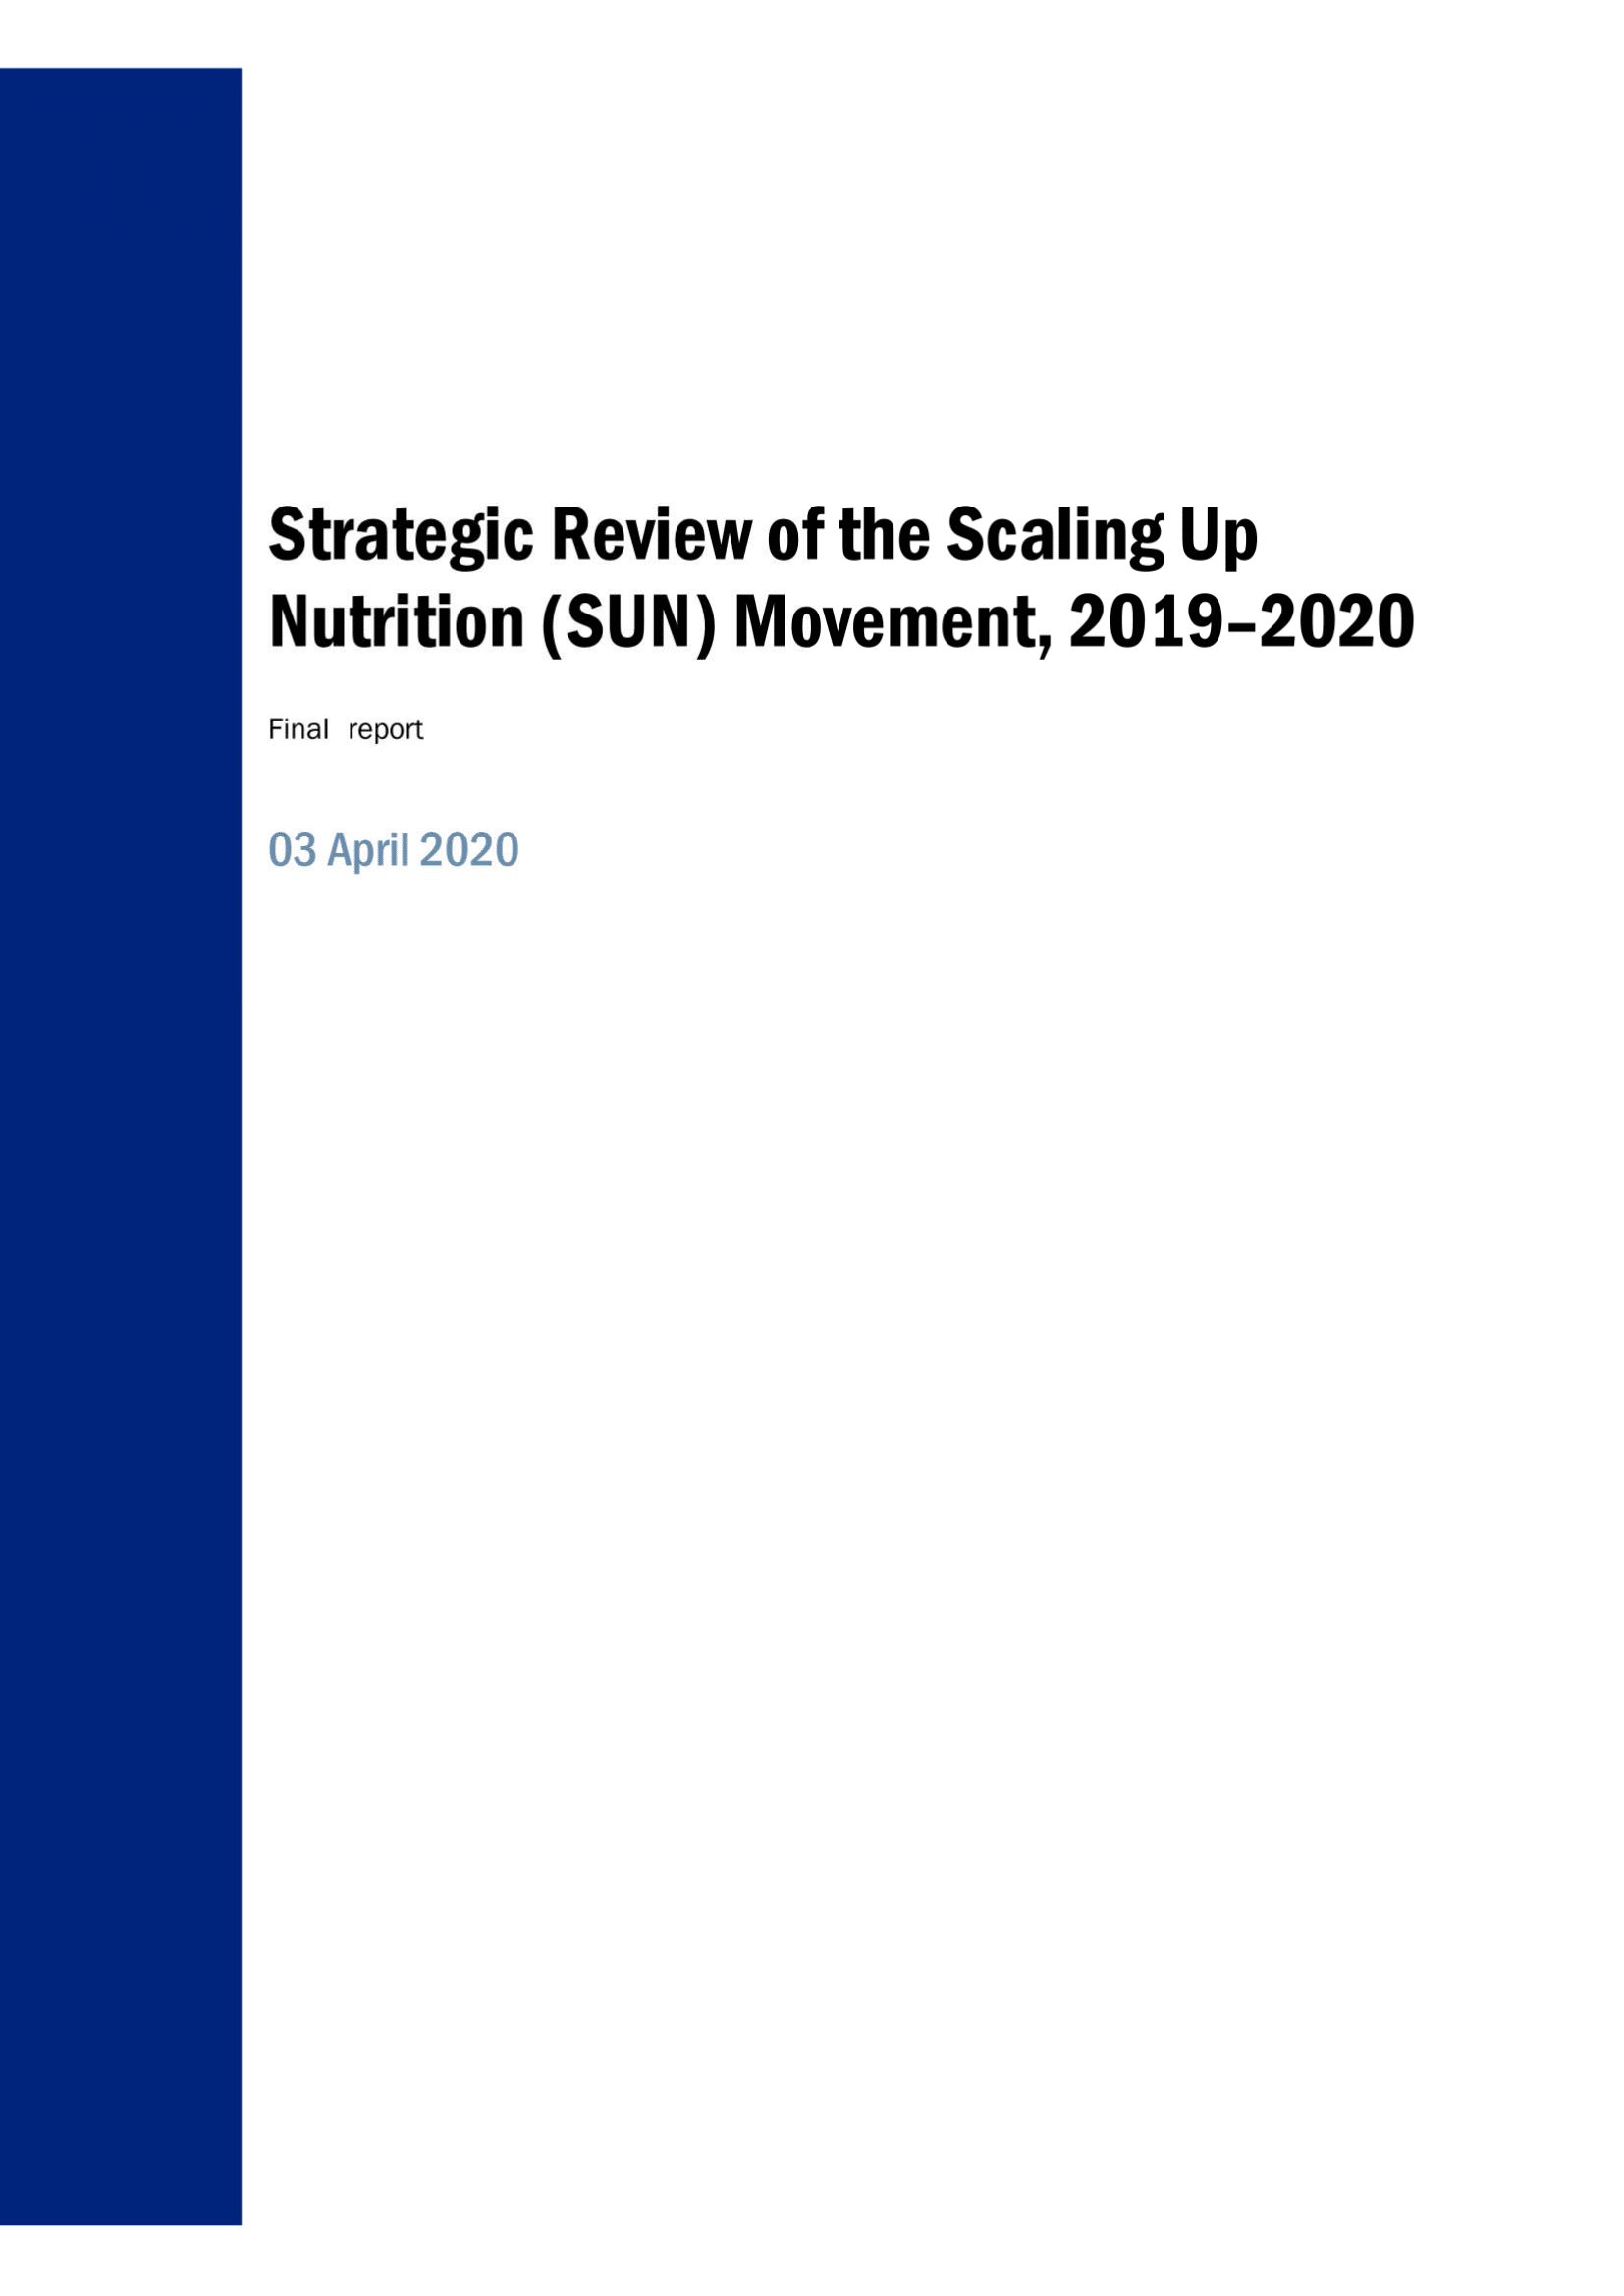 SUN – Strategic Review Final Report